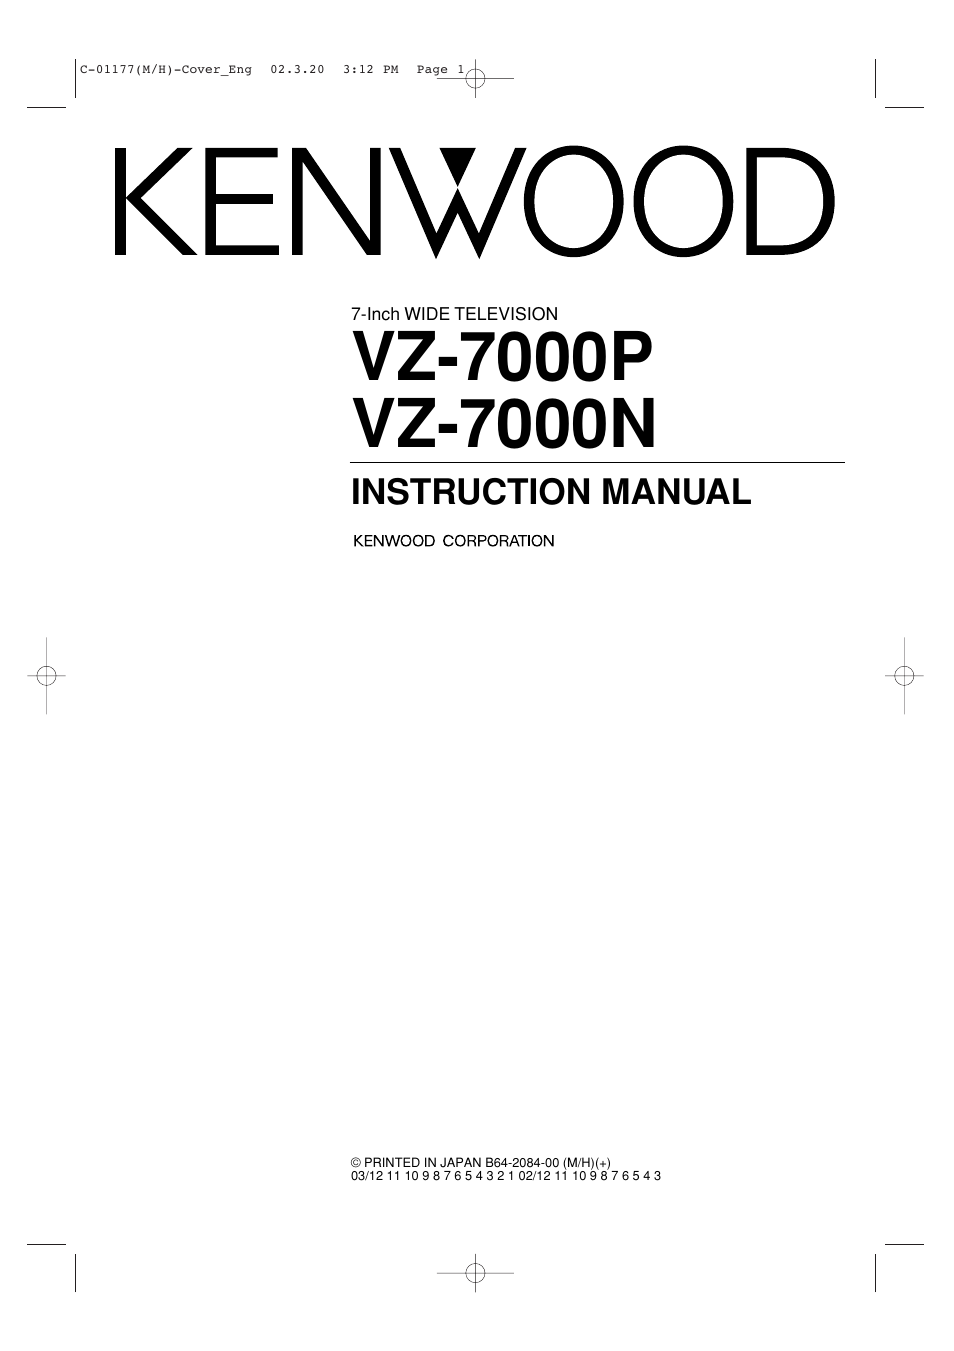 Kenwood VZ-7000P User Manual | 28 pages